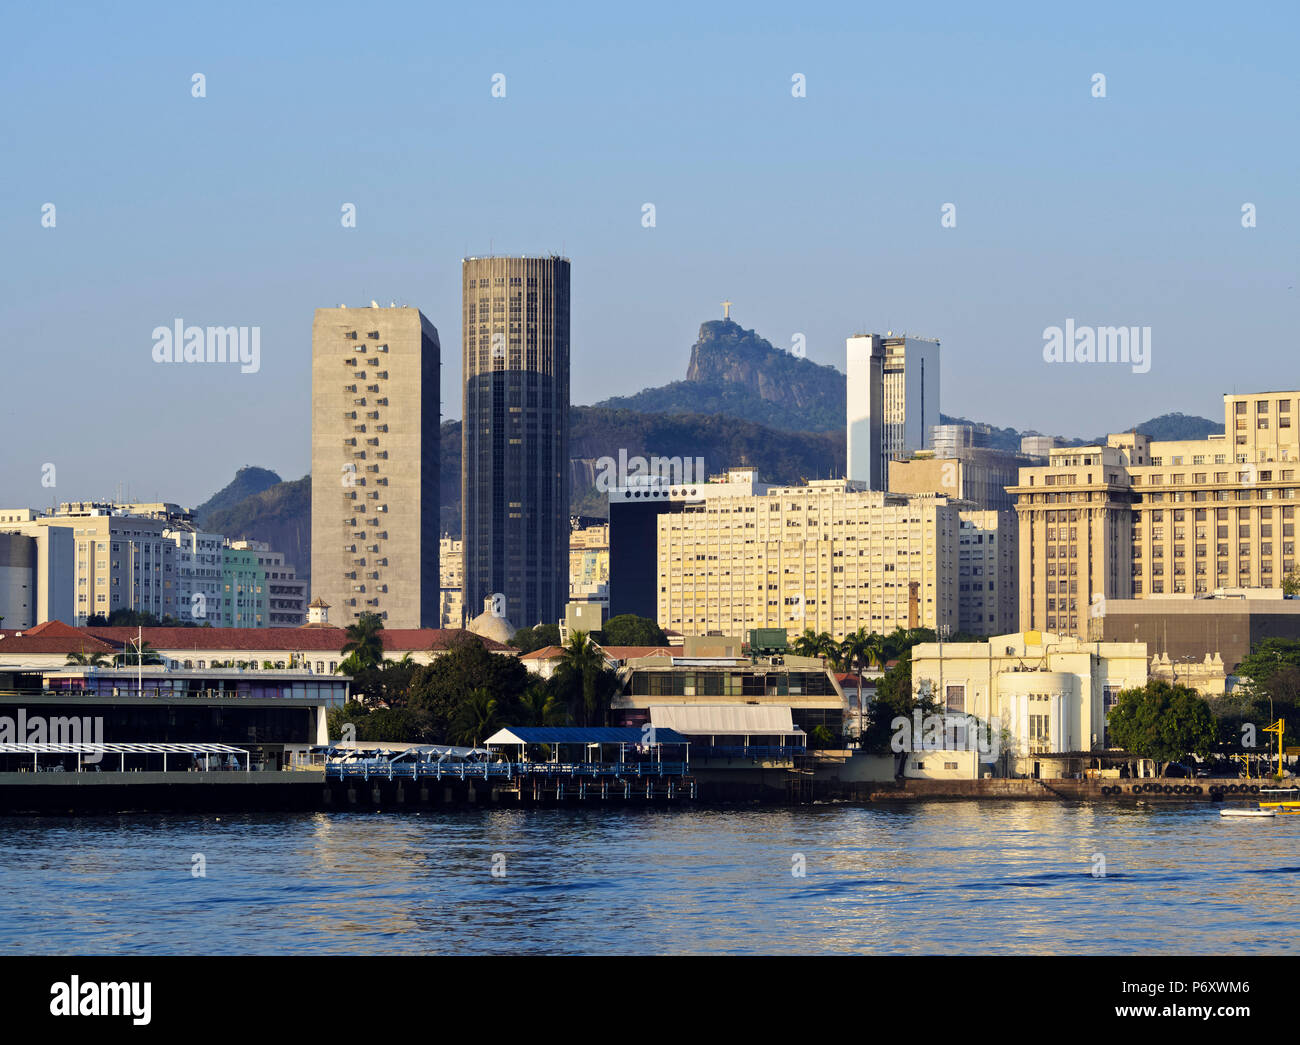 Brazil, State of Rio de Janeiro, City of Rio de Janeiro, City viewed from the Guanabara Bay side. Stock Photo